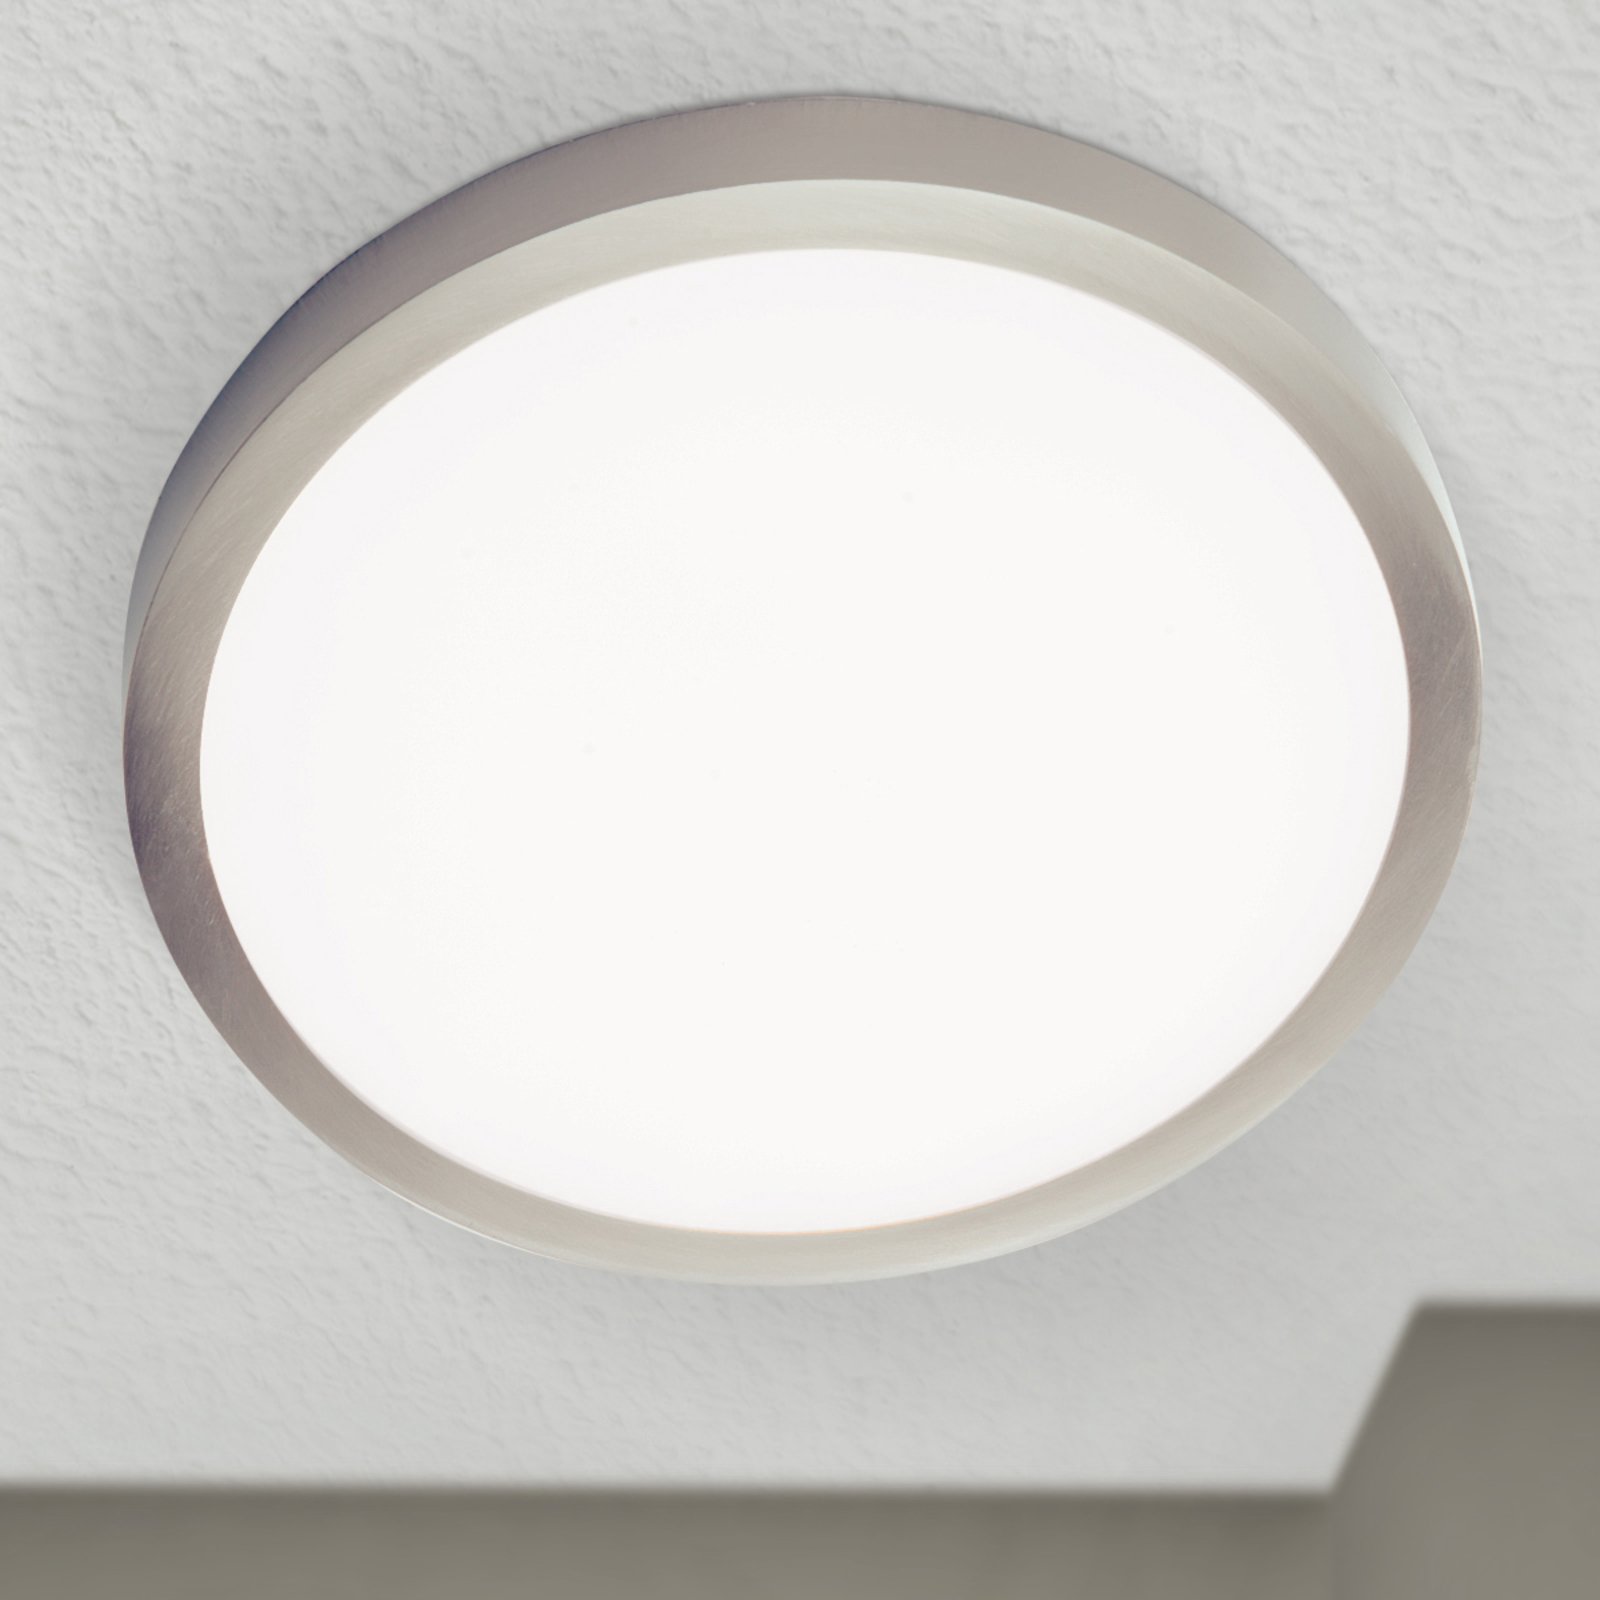 Vika LED ceiling light round matt titanium Ø 23 cm